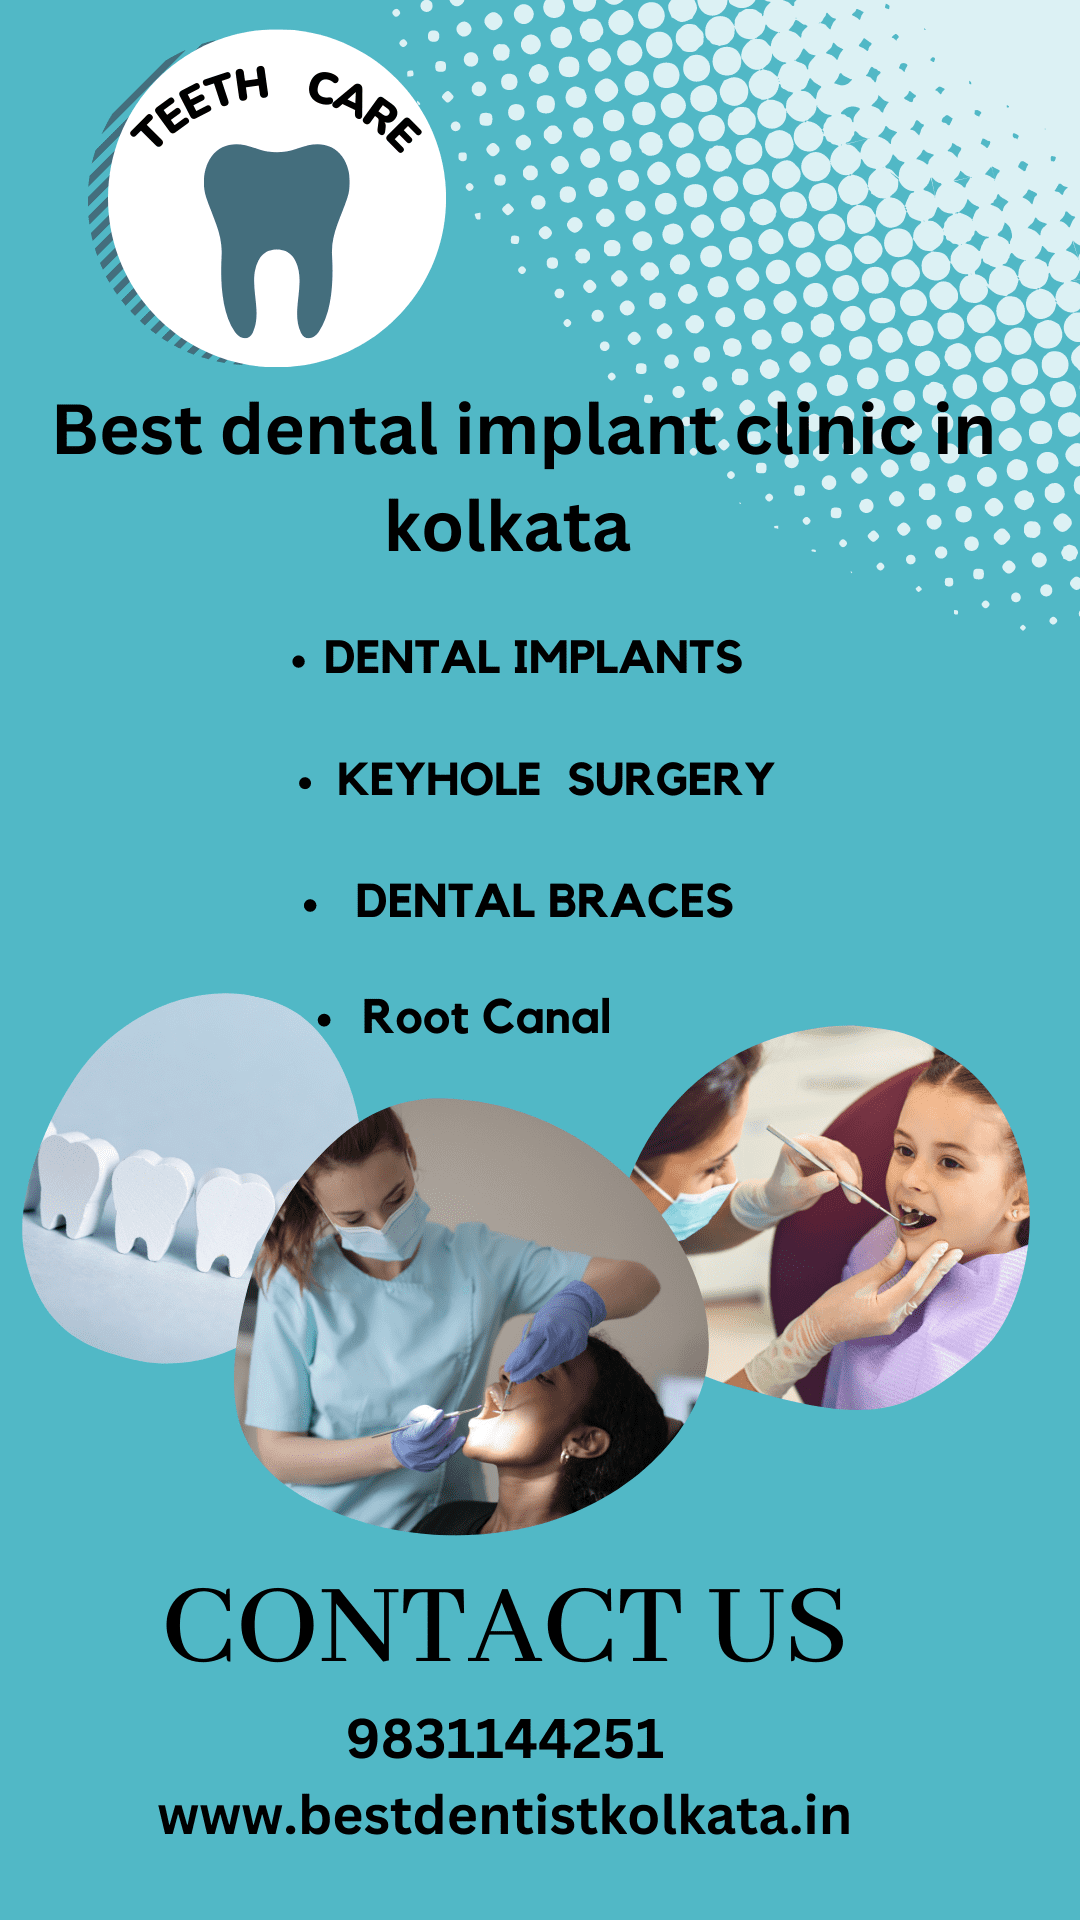 Teeth Care : Get Best Root Canal Treatment in Kolkata - Kolkata Health, Personal Trainer